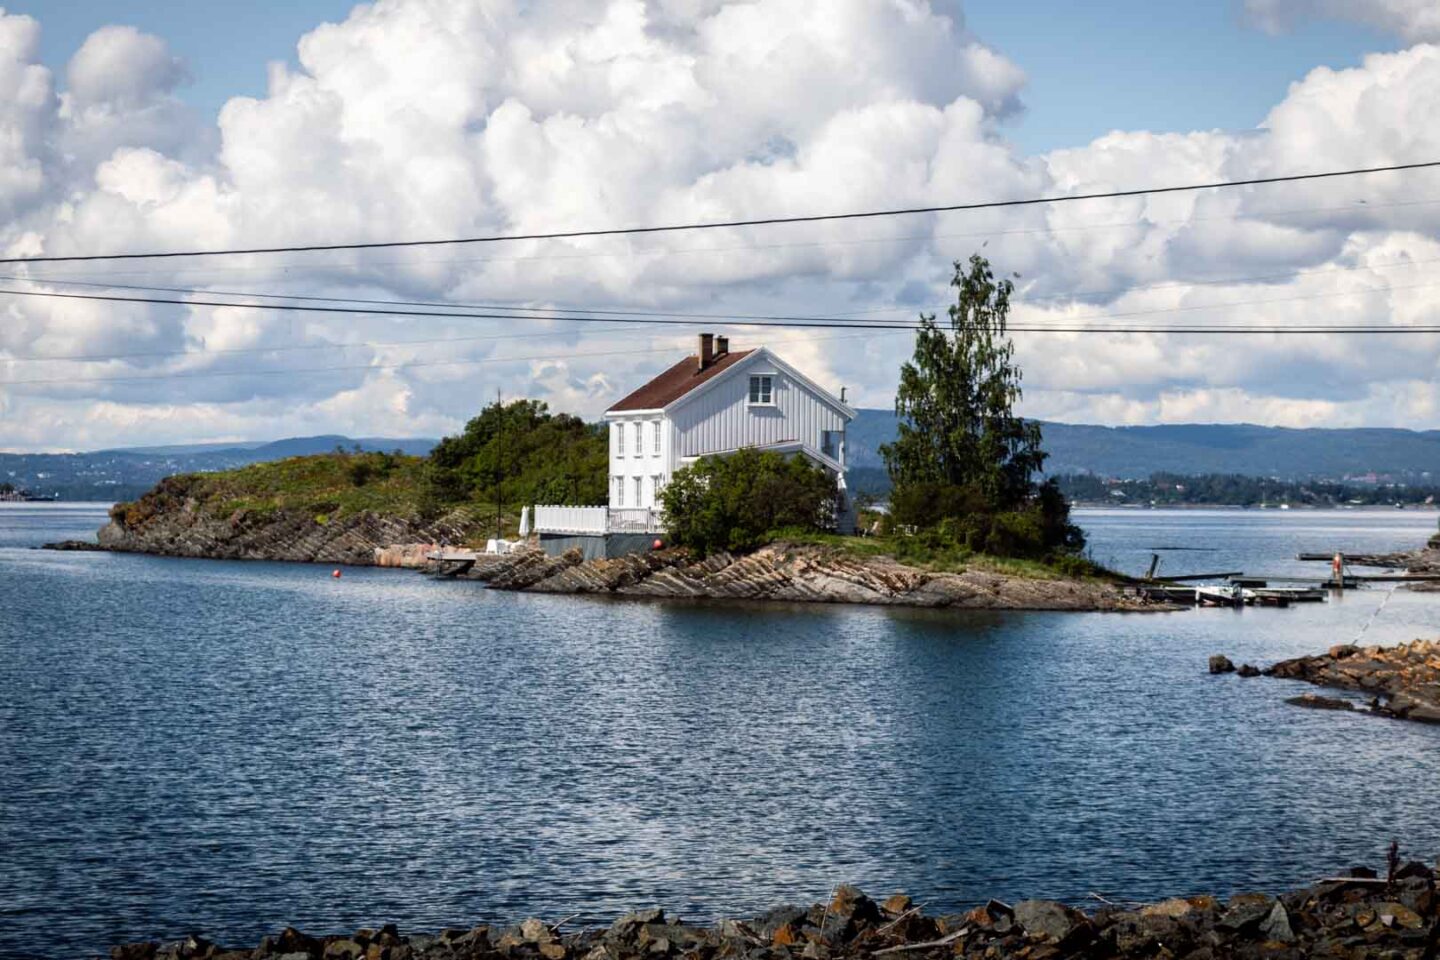 Oslo Fjord island hopping